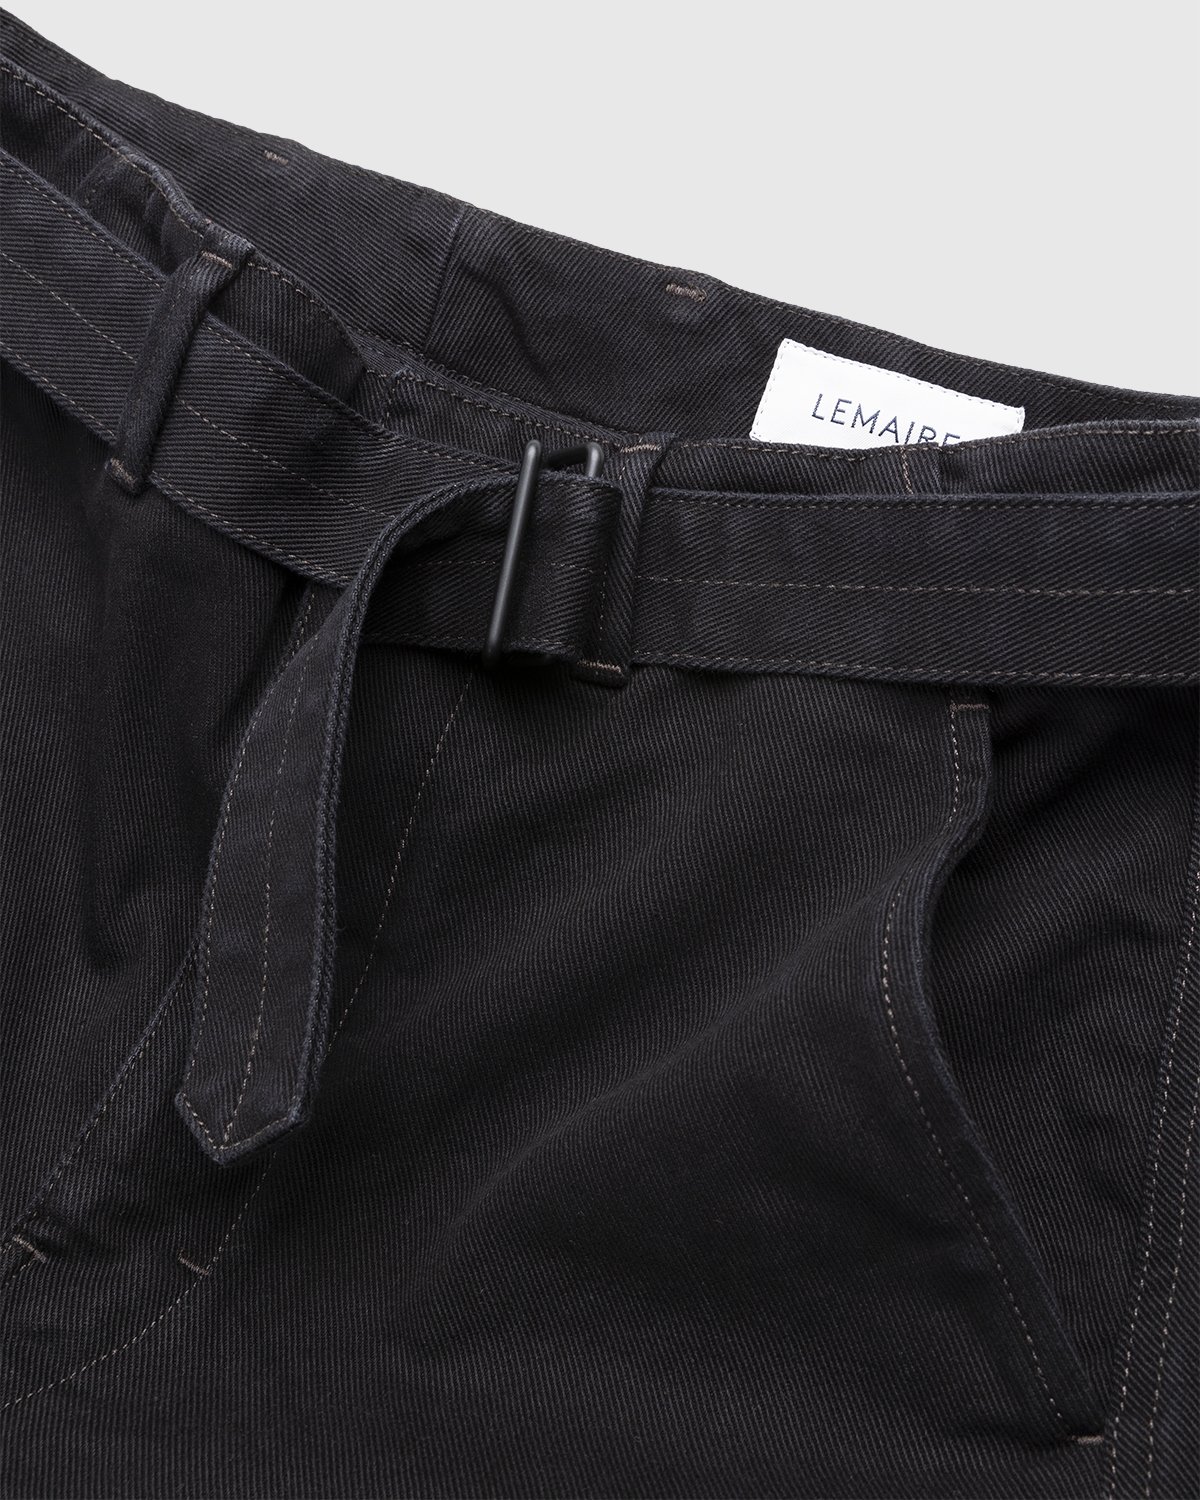 Lemaire - Rinsed Denim Twisted Pants Black - Clothing - Black - Image 4